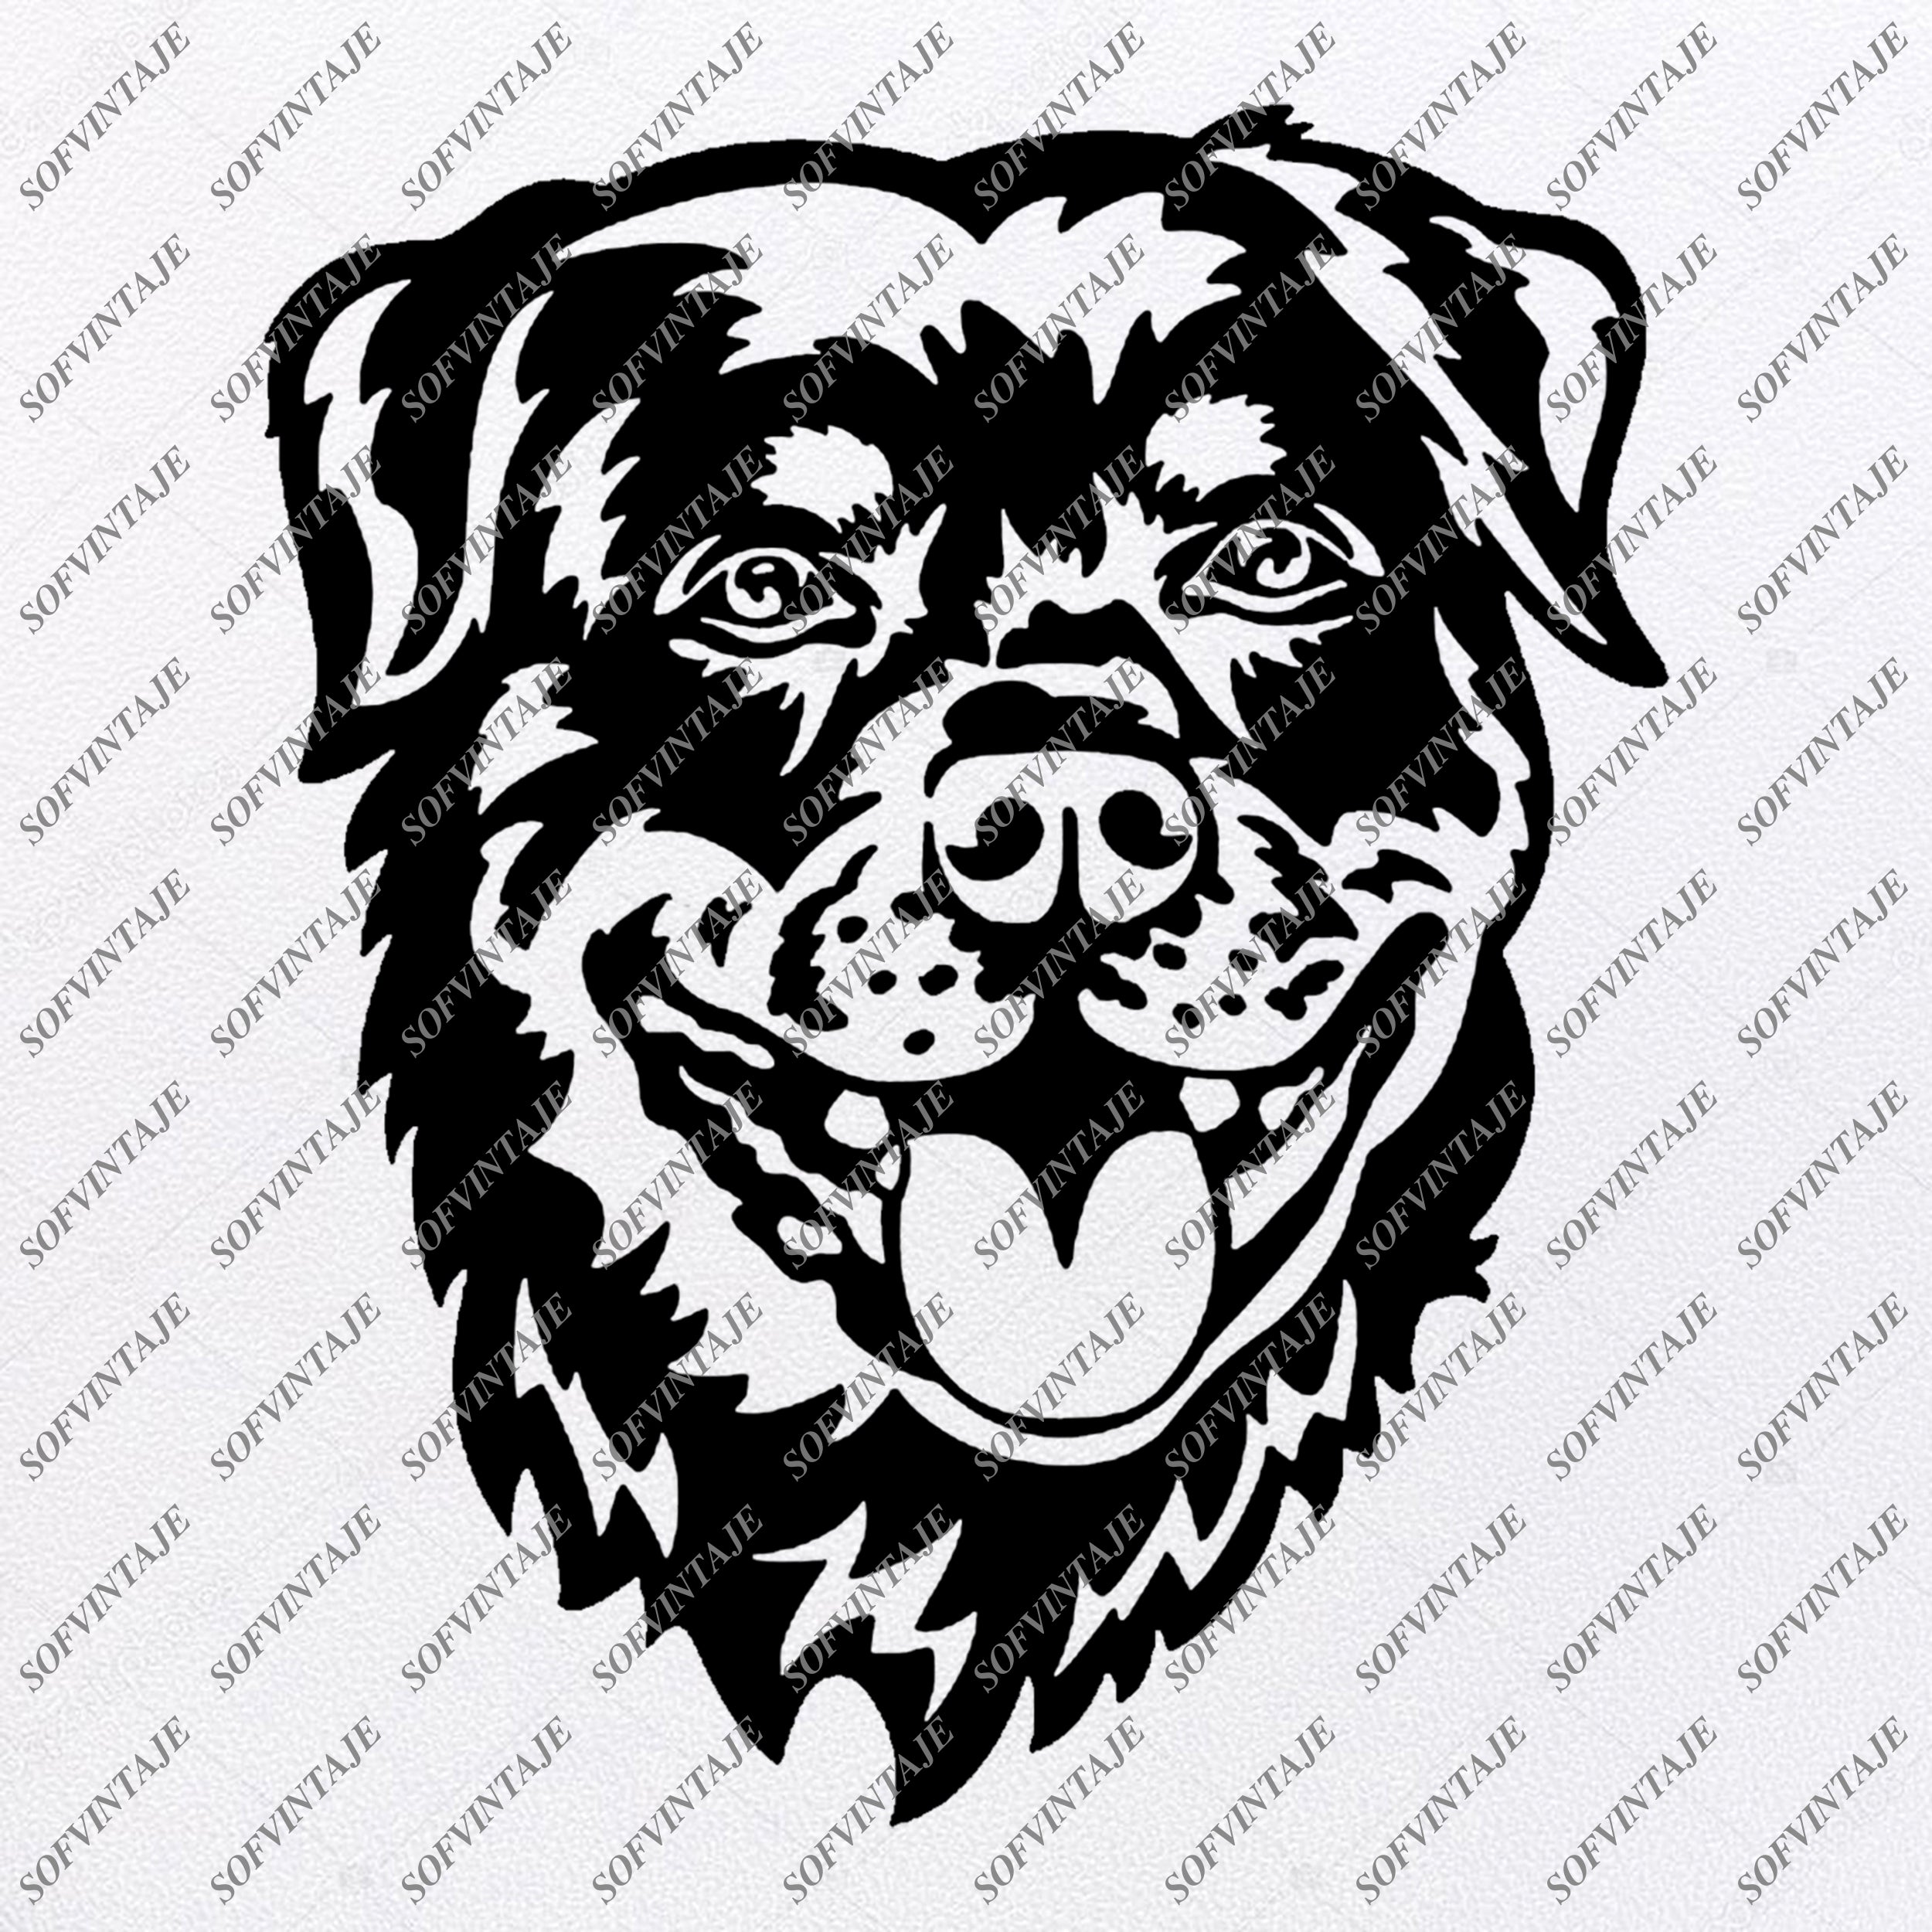 Download Digital Download File Rottweiler Dog Silhouette Svg Eps Png Dxf Instant Download Vinyl Craft Cutting Clip Art Digital Art Collectibles Vadel Com